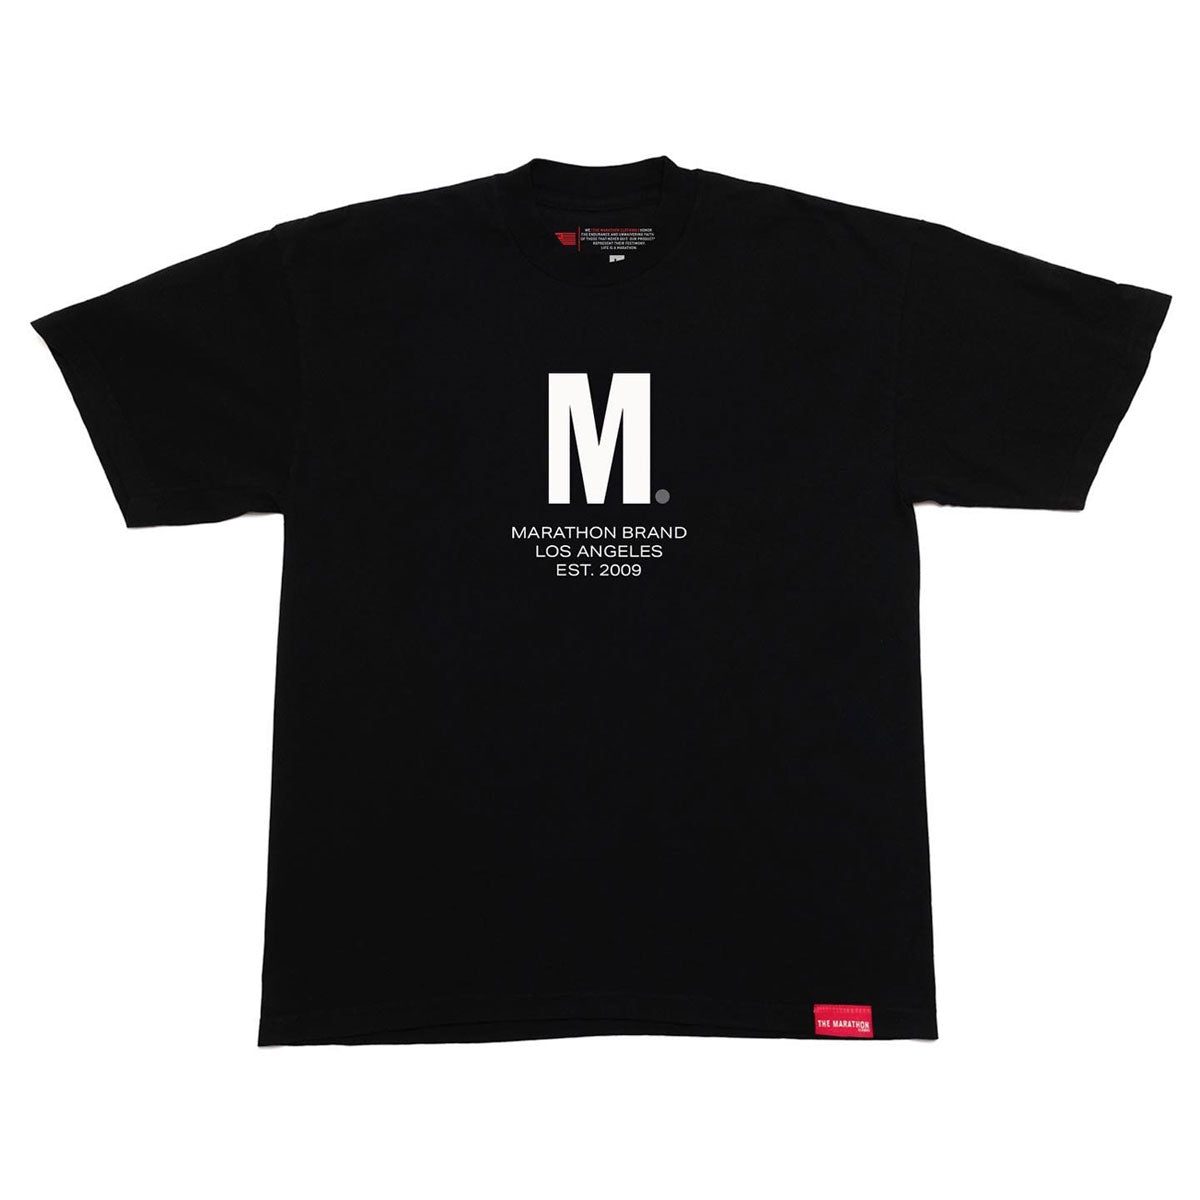 Big M T-Shirt - Black/Bone - Front